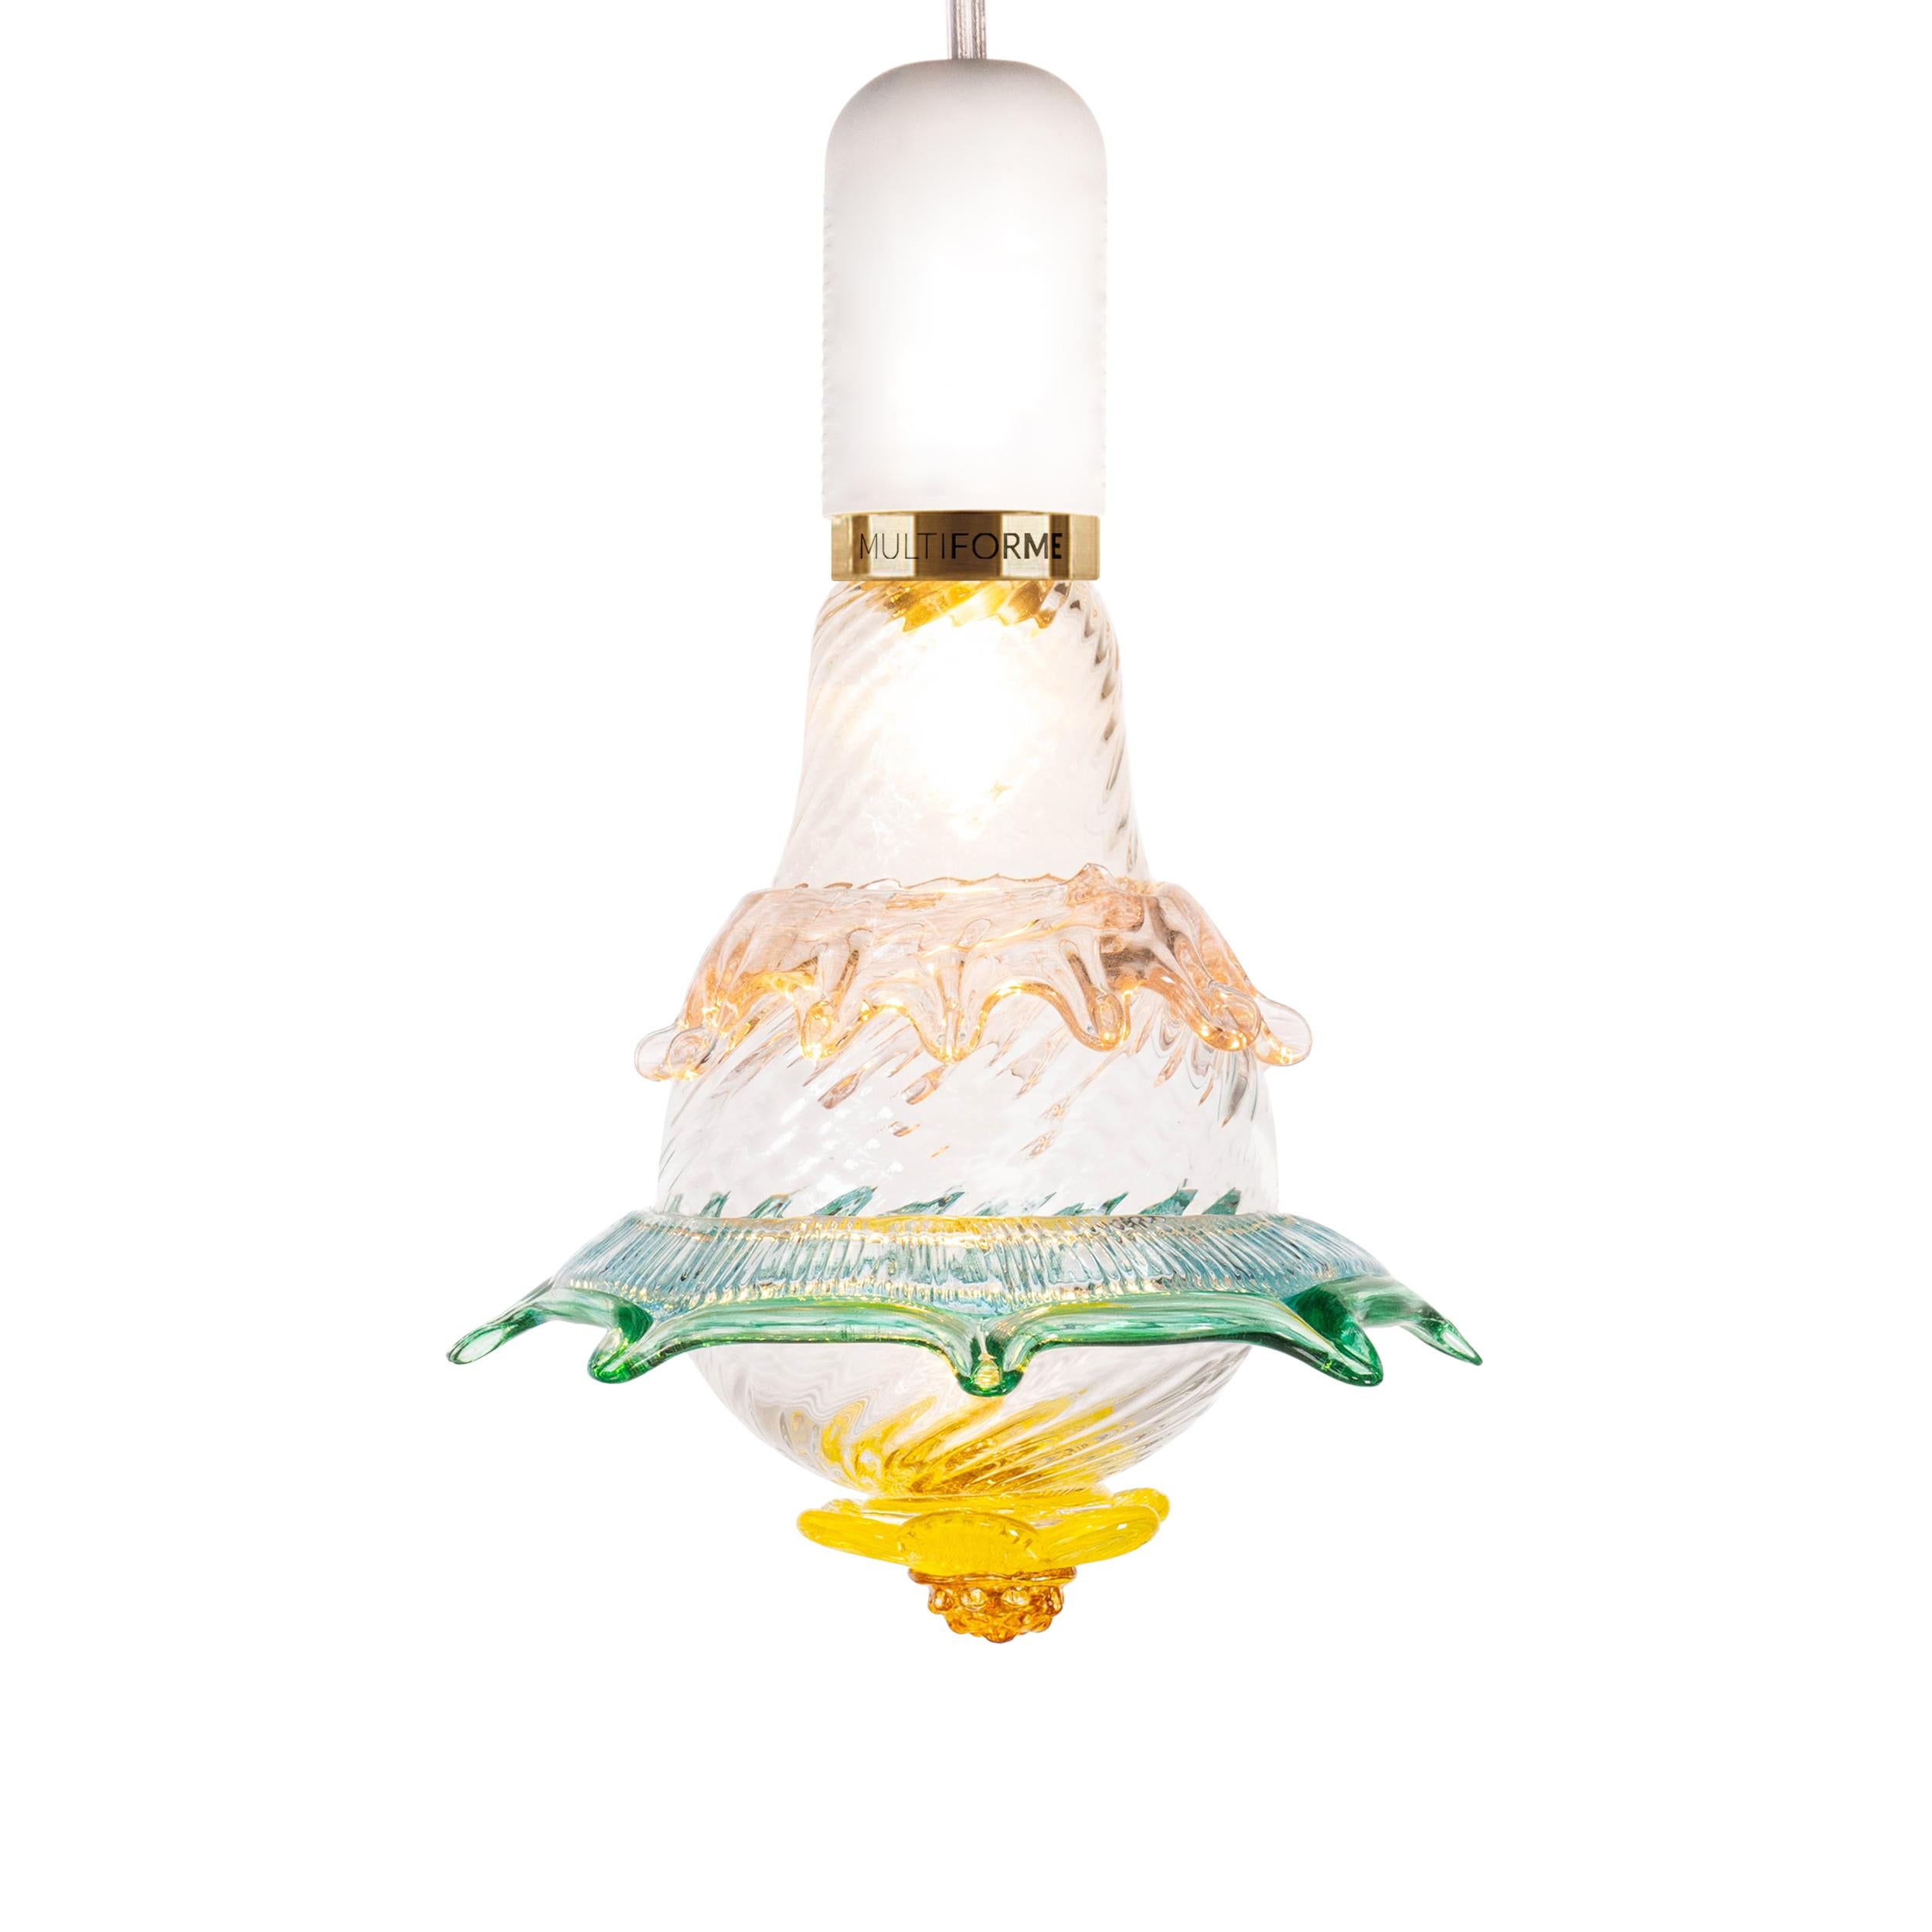 Artistic glass lightbulb chandelier Murano Bulb Marcantonio X Multiforme #11 In New Condition For Sale In Trebaseleghe, IT